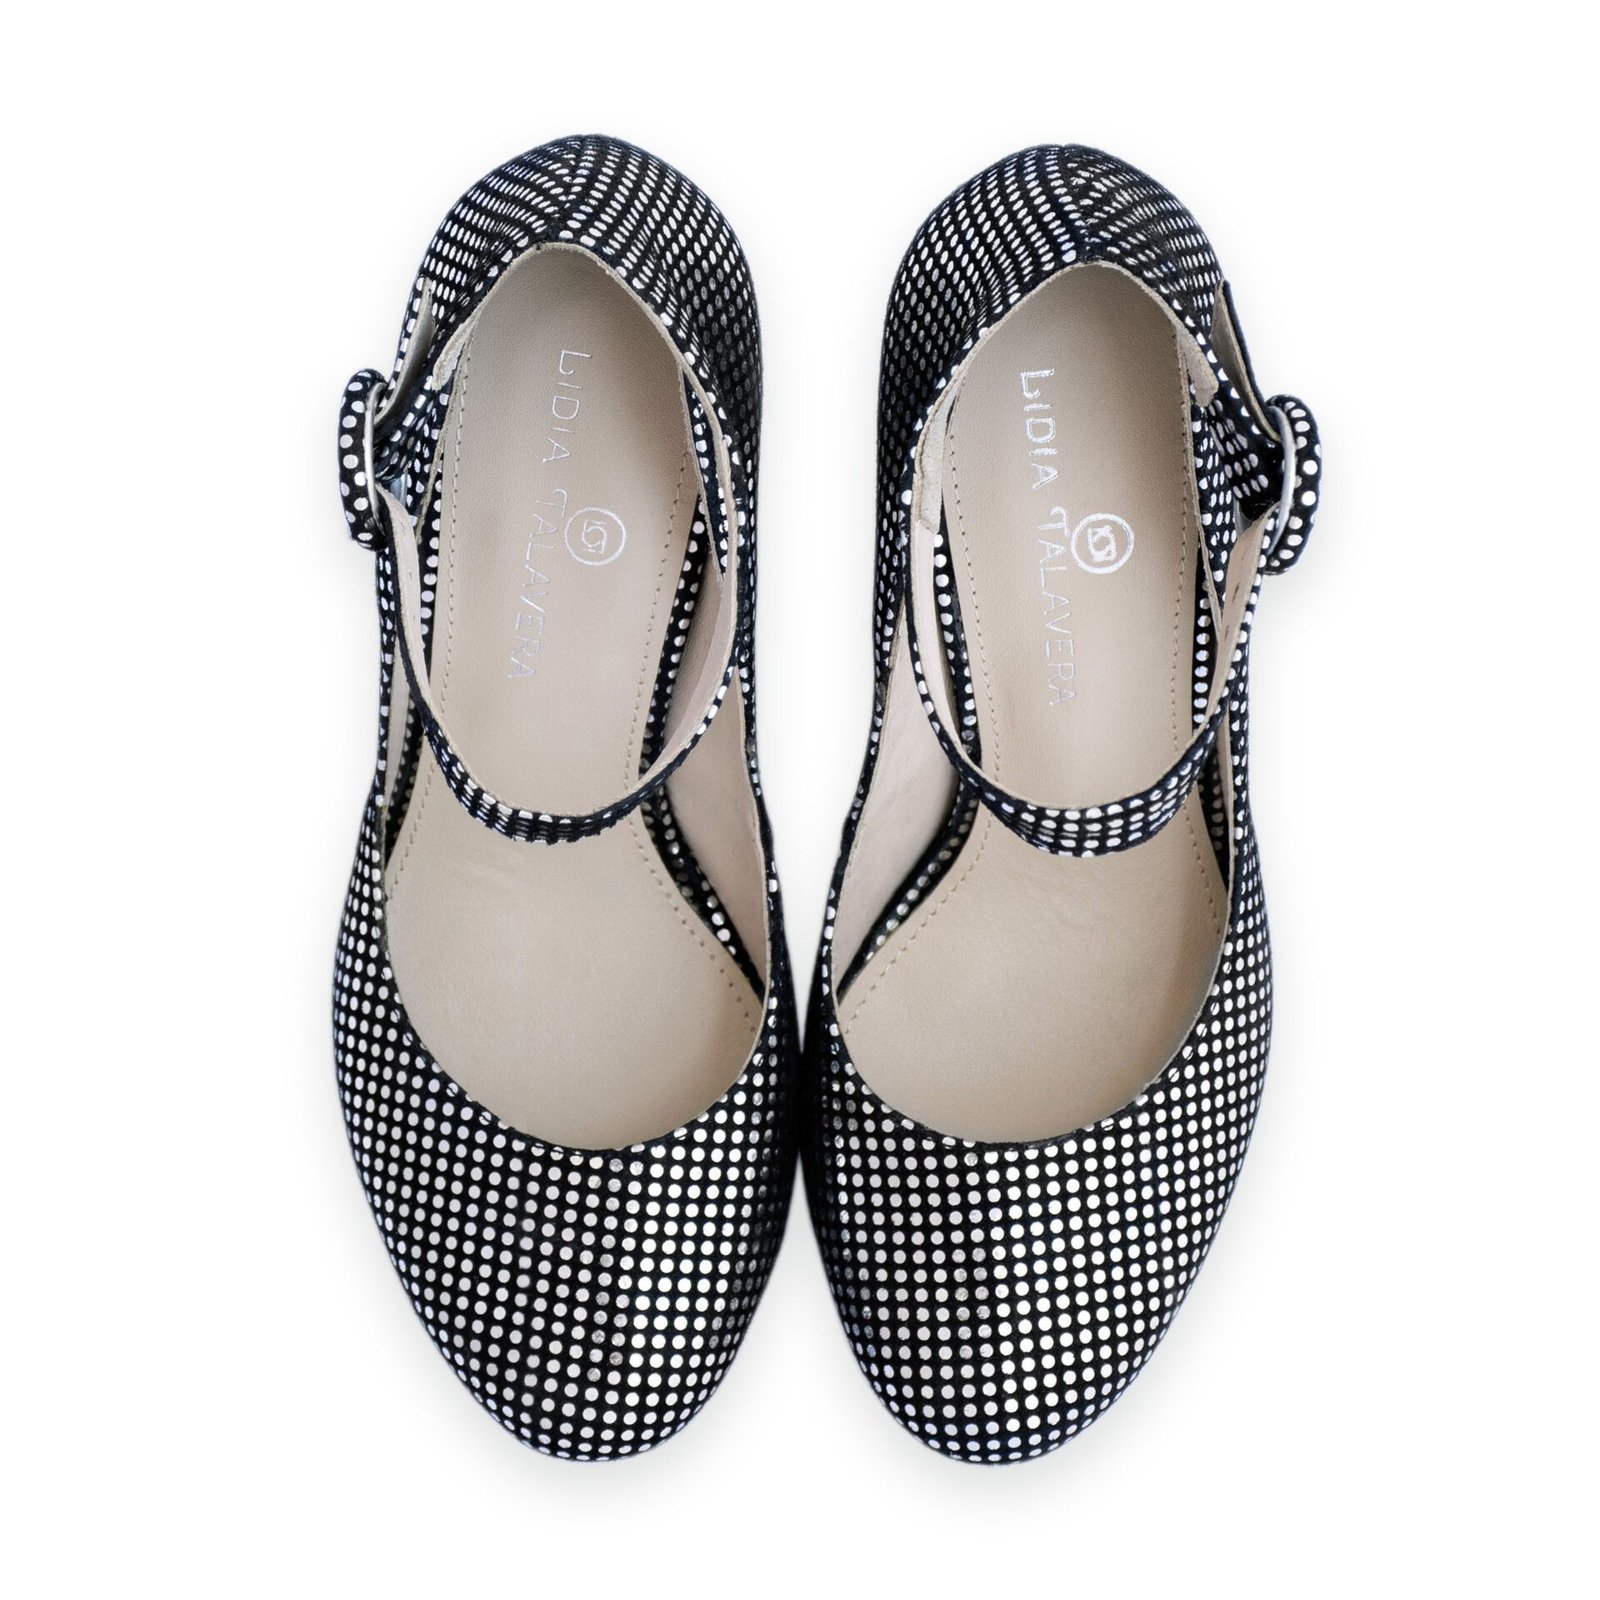 Black & Silver custom made wedding heels for men & women